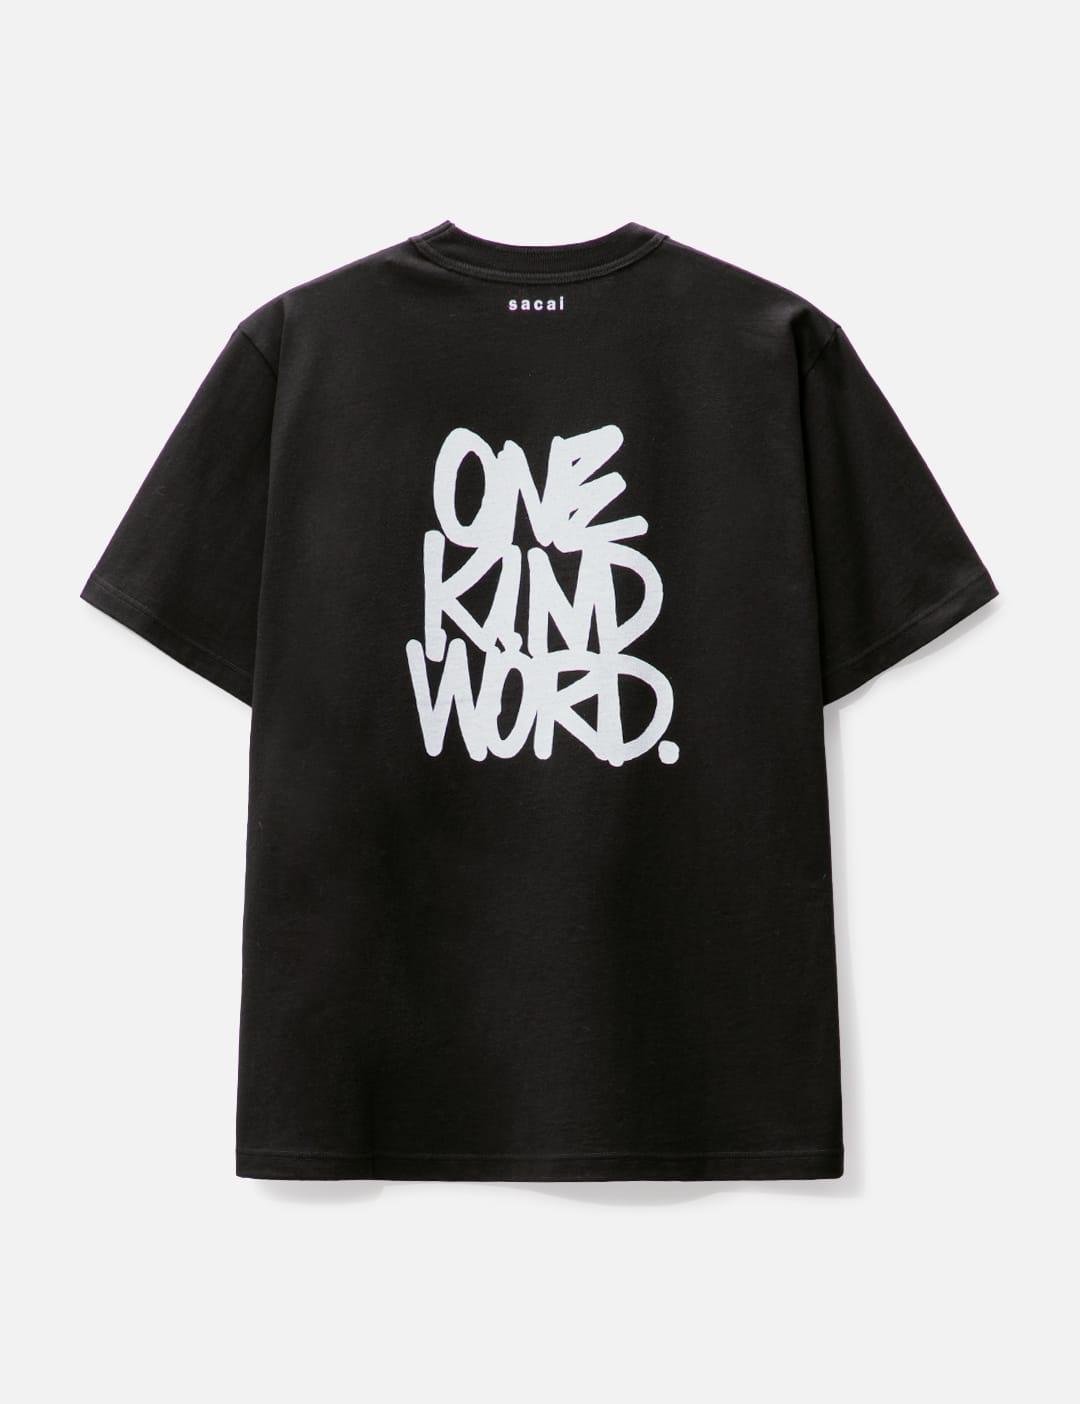 Sacai - Sacai x Eric Haze One Kind Word Tシャツ | HBX - ハイプ